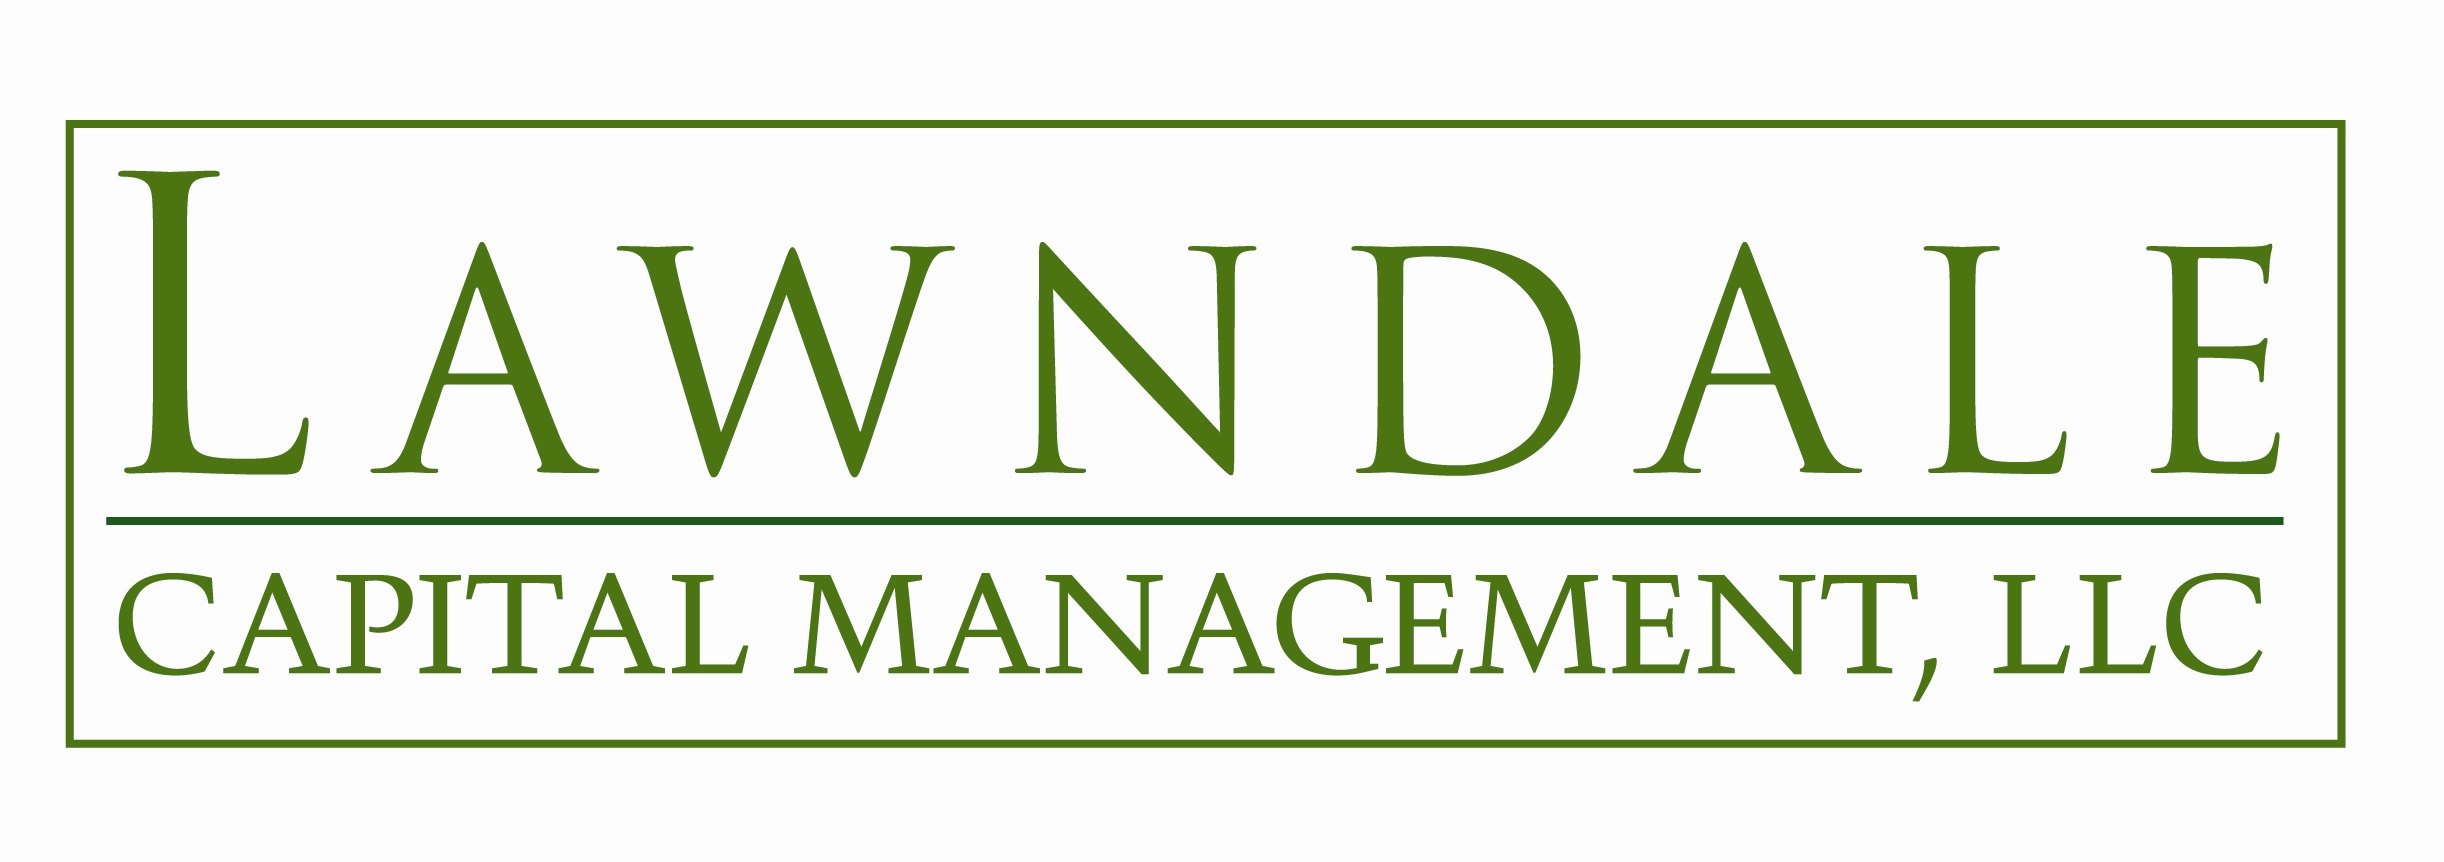 Lawndale Capital Management, LLC logo